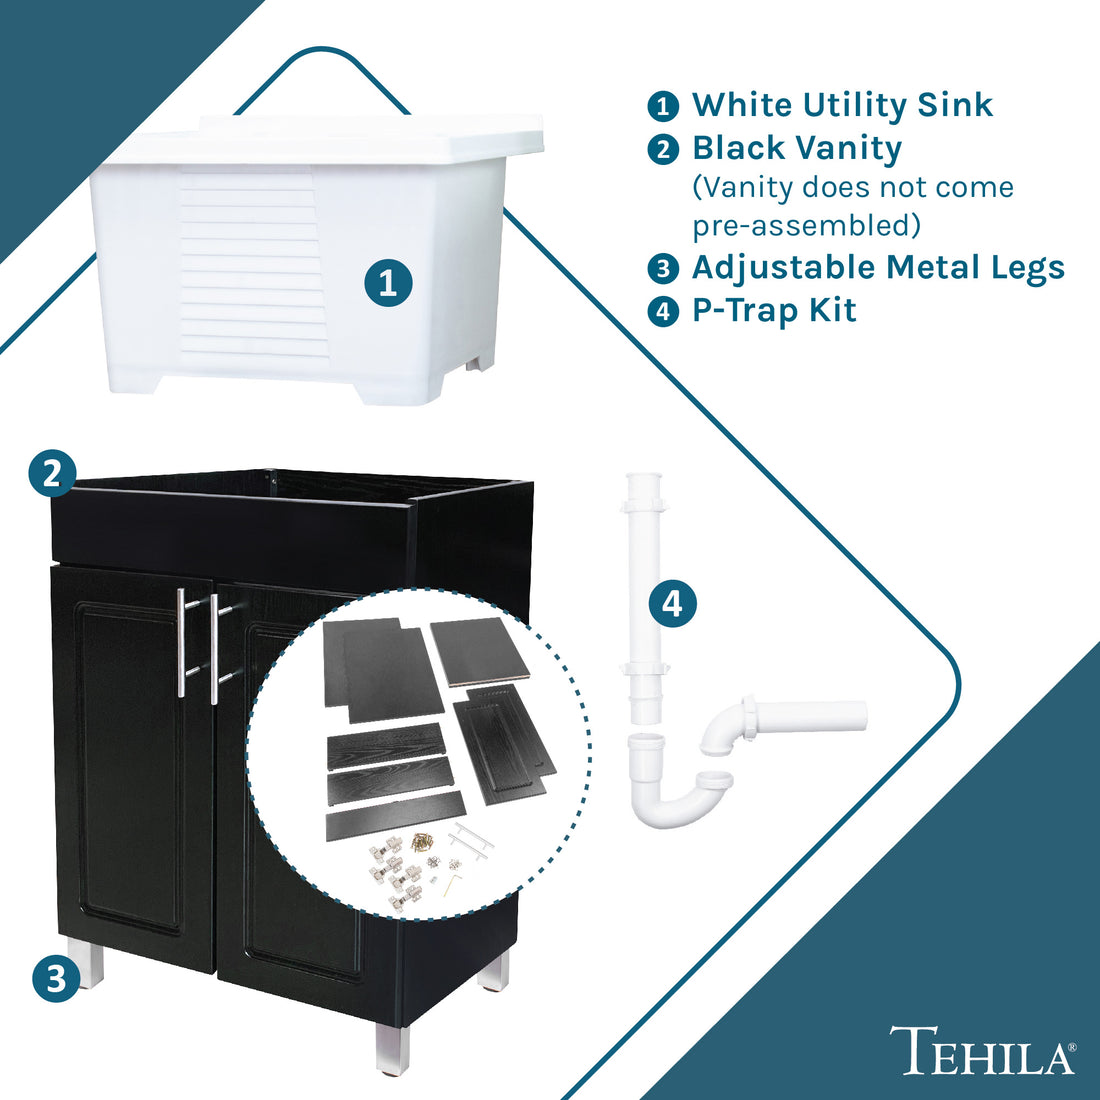 White Utility Sink | Black Vanity (Vanity does not come pre-assembled) | Adjustable Metal Legs | P-Trap Kit